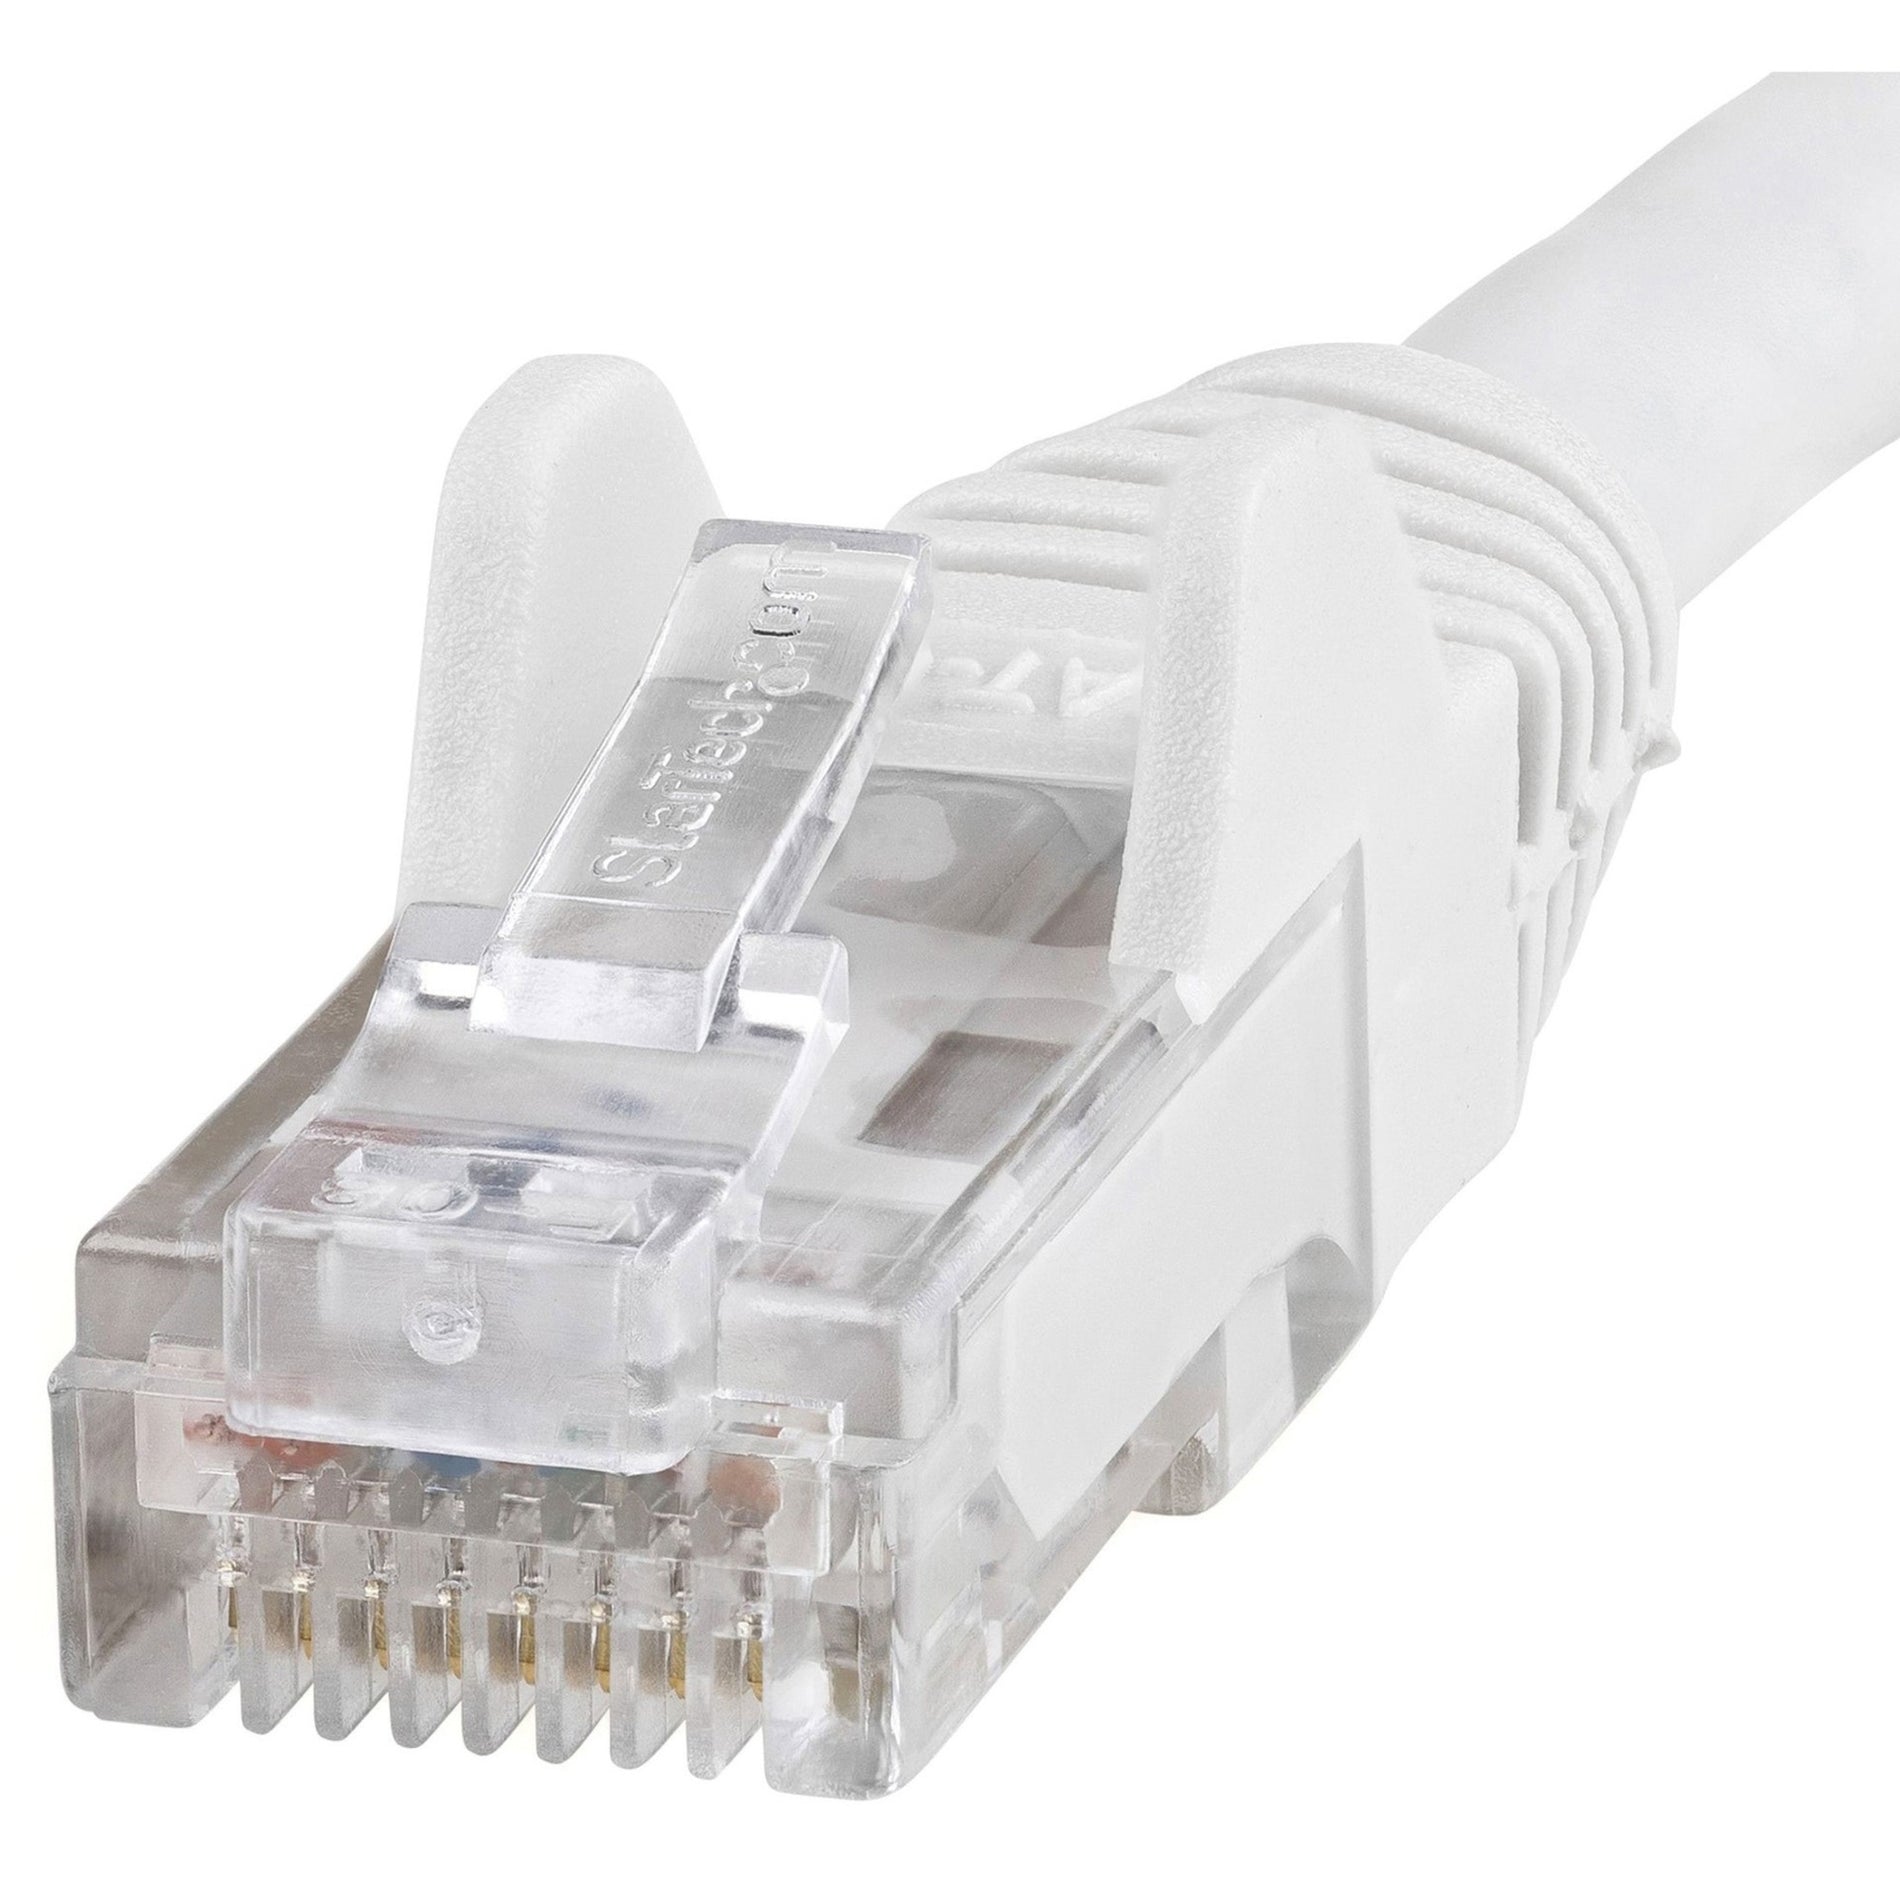 Marca: StarTech.com Cable de parche UTP Cat6 sin enganches blanco de 7 pies con garantía de por vida verificado por ETL